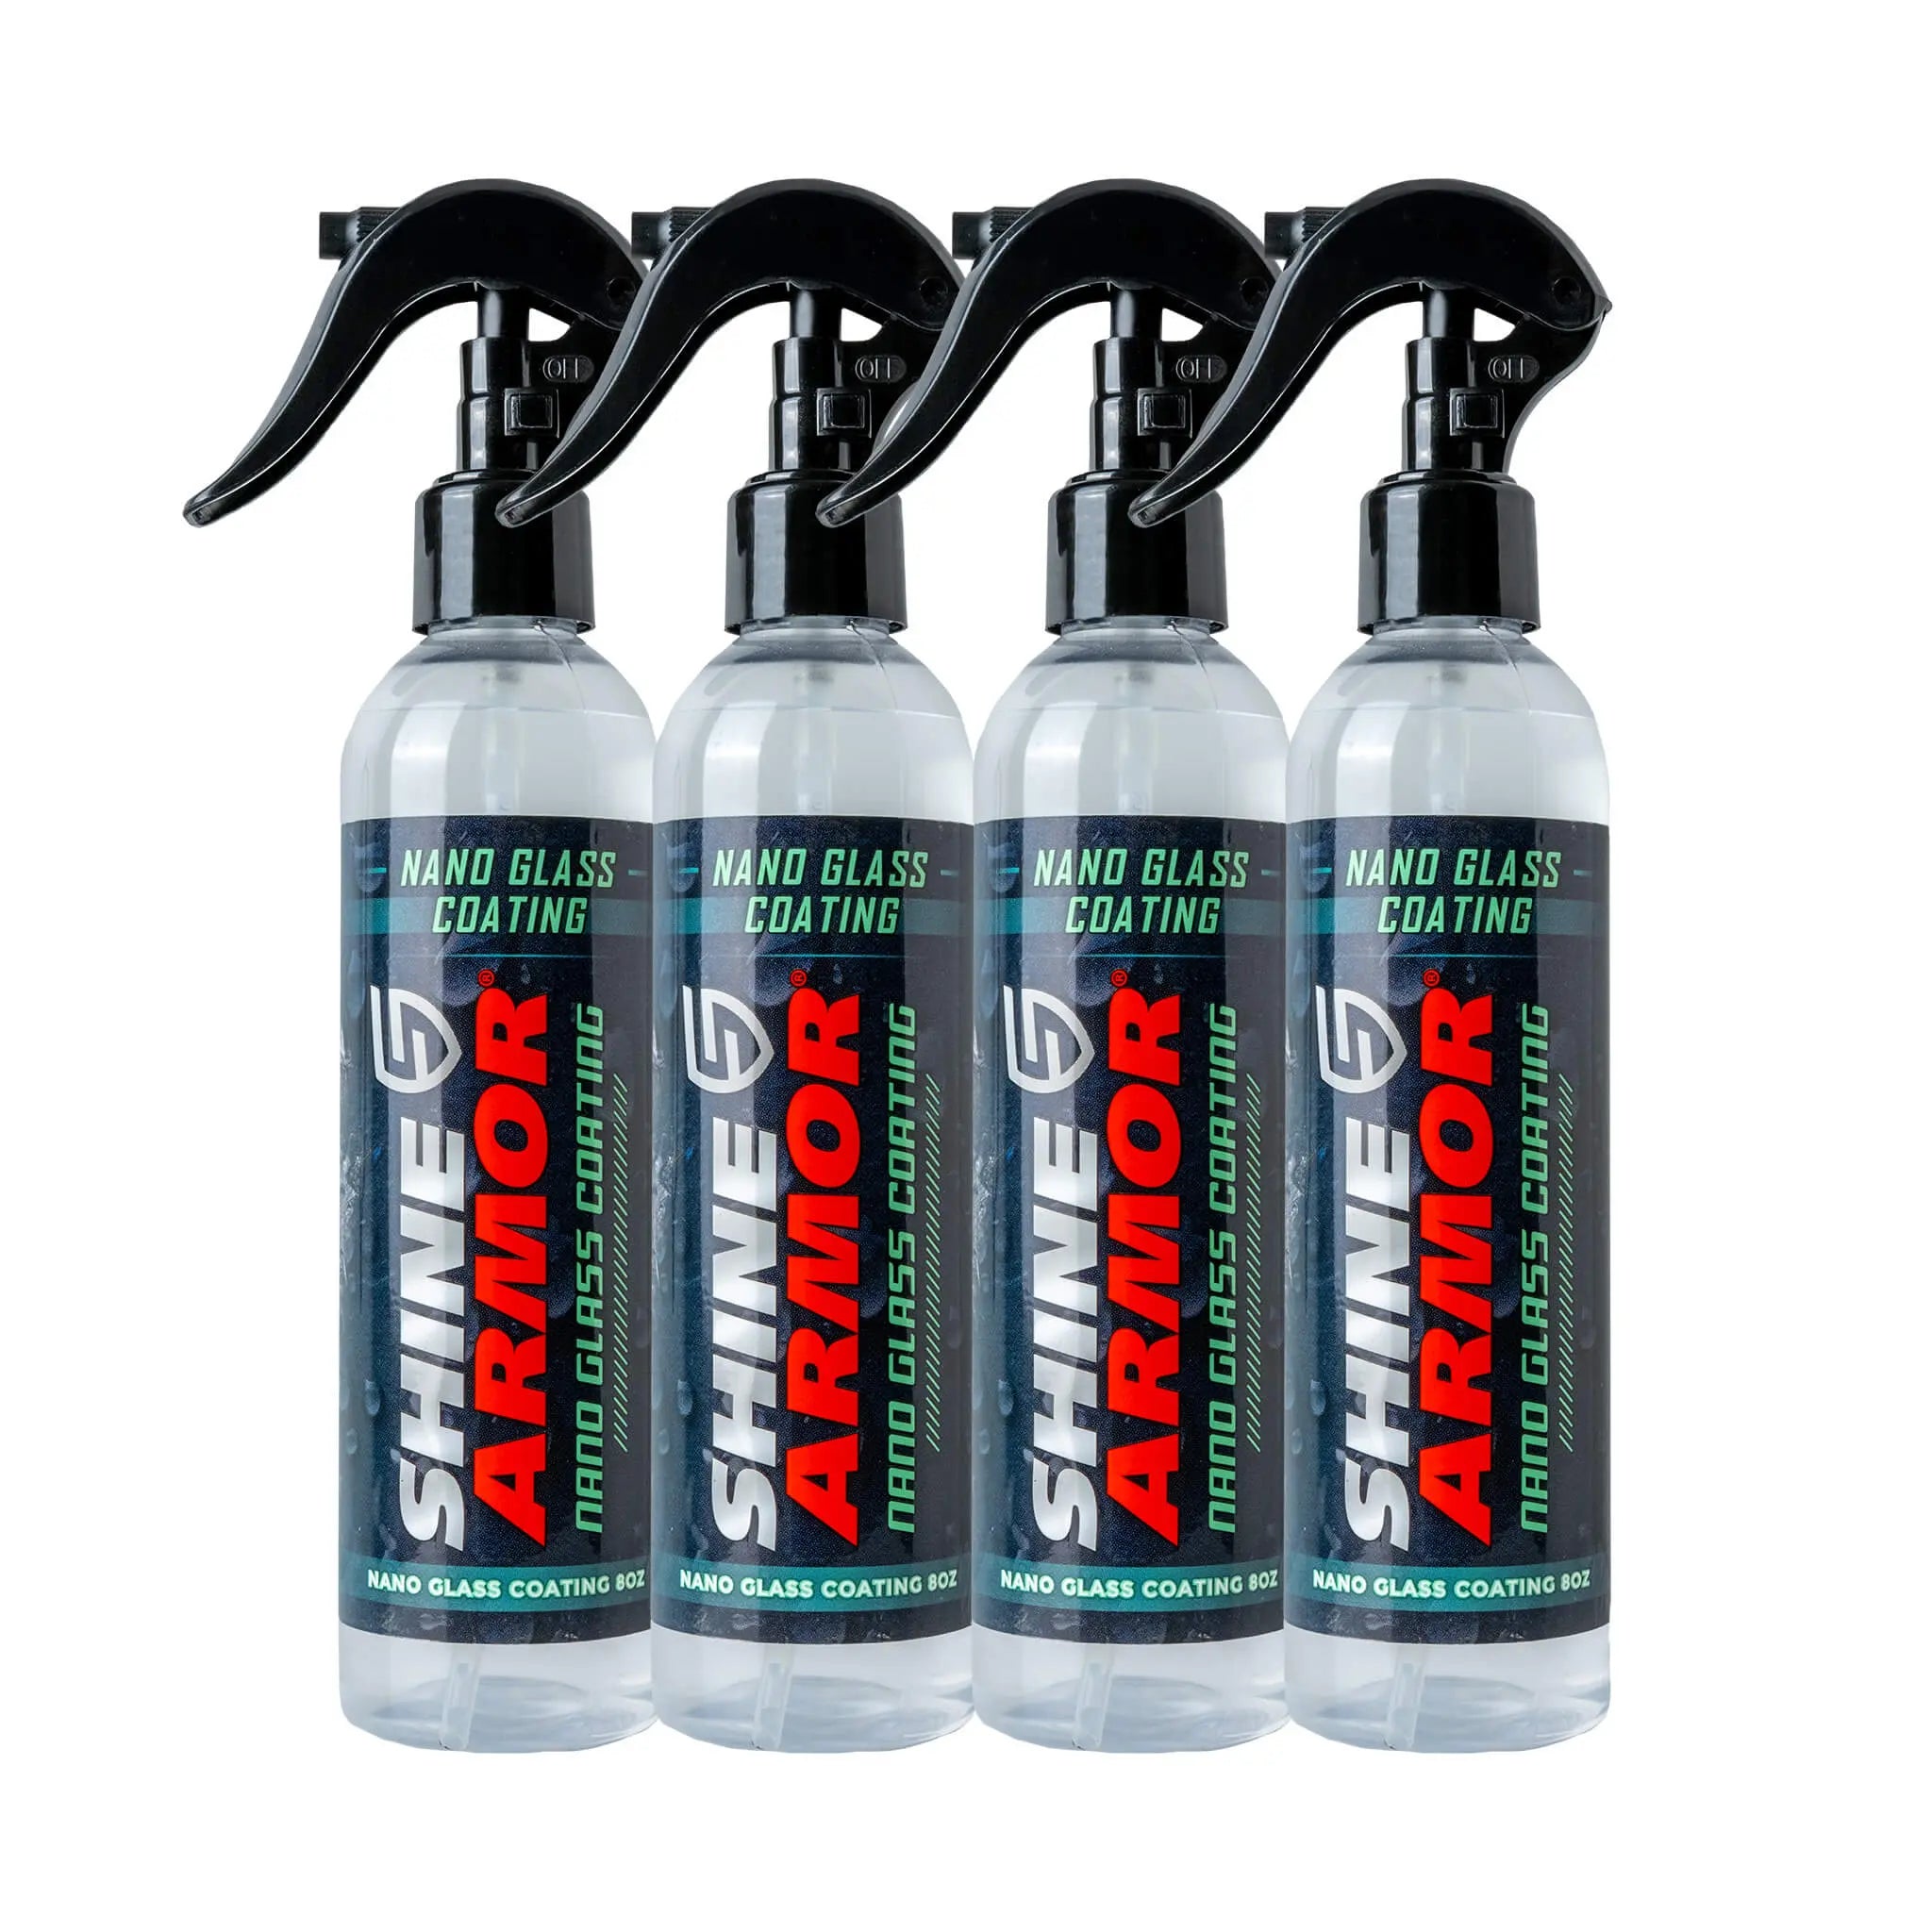 There's 1 Graphene Ceramic Spray bottle free for Shine Armor 😎 - Shine  Armor